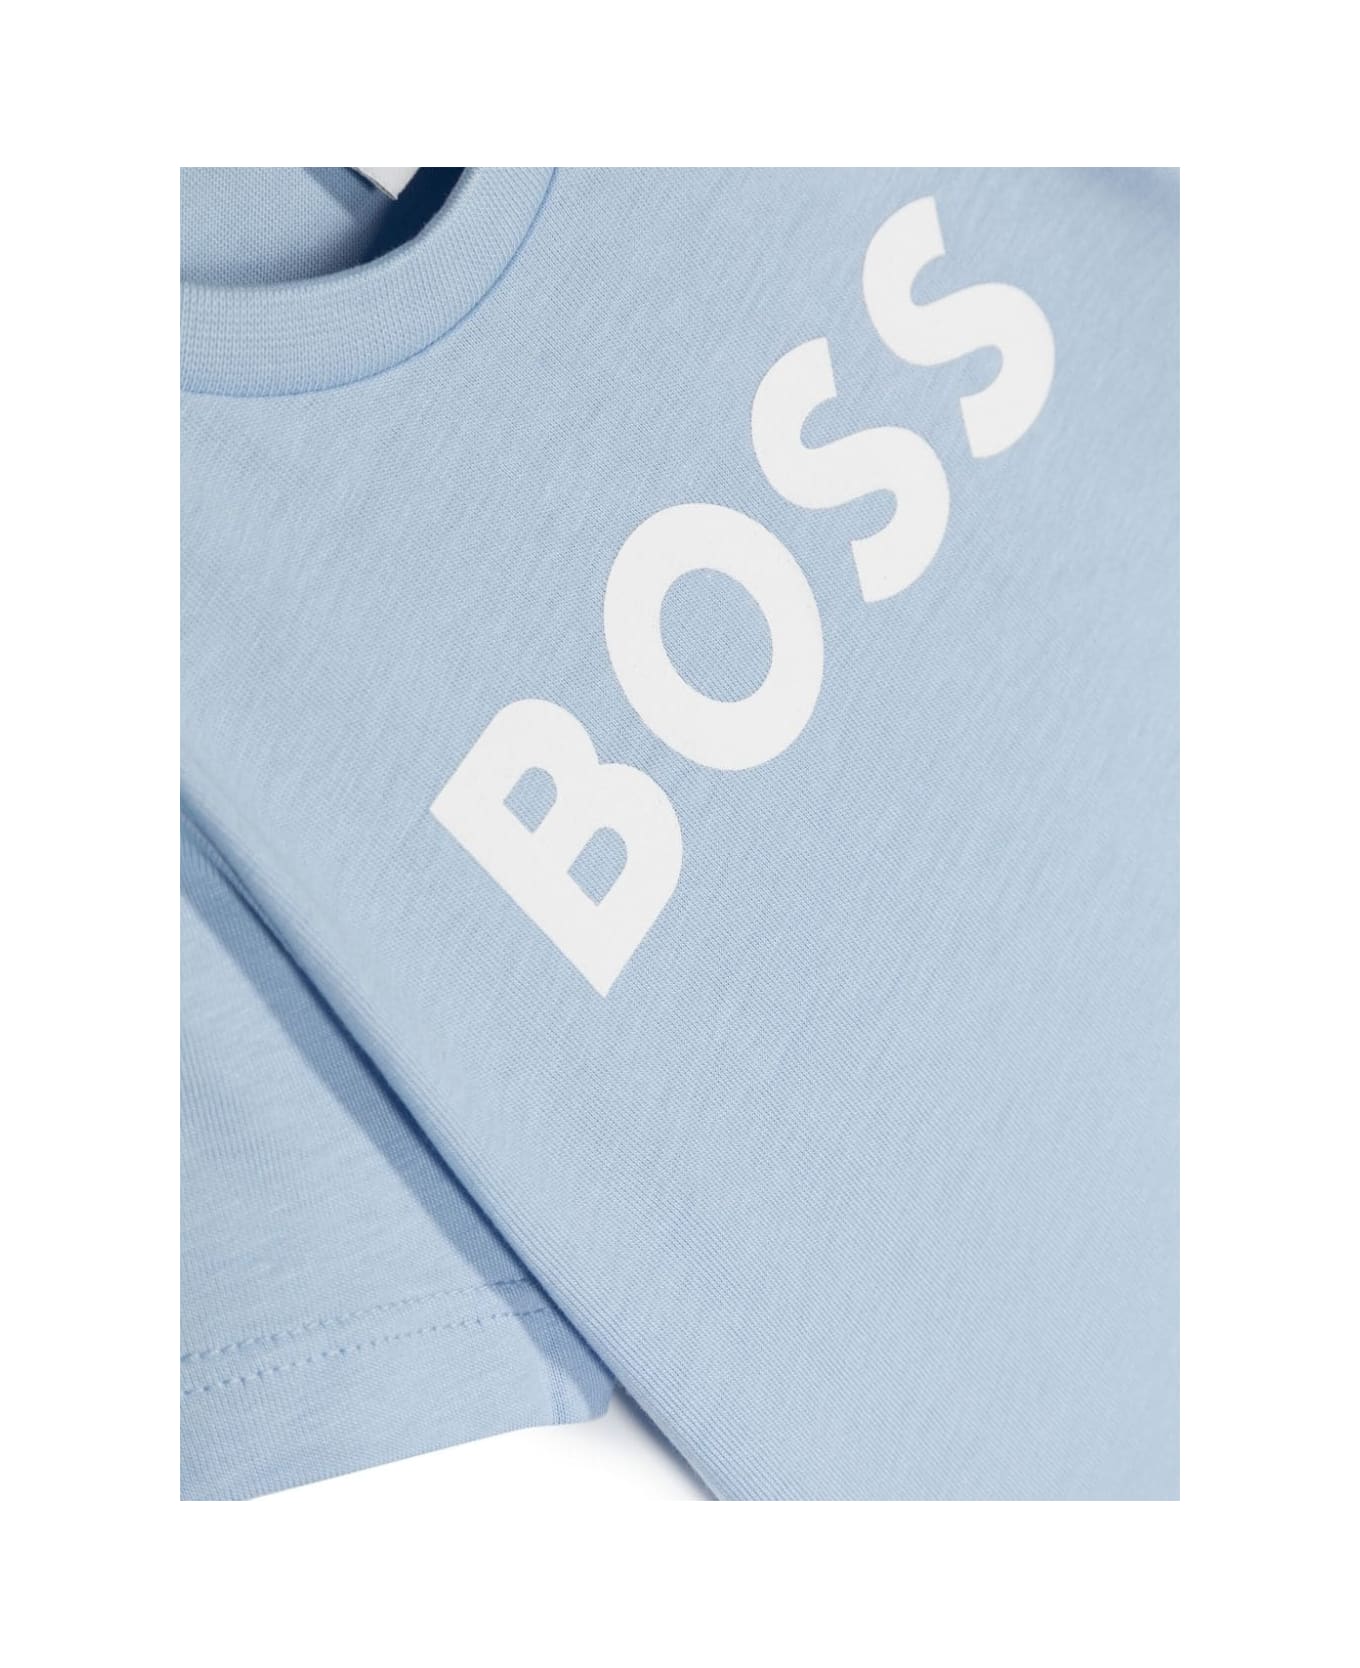 Hugo Boss T-shirt With Print - Light blue